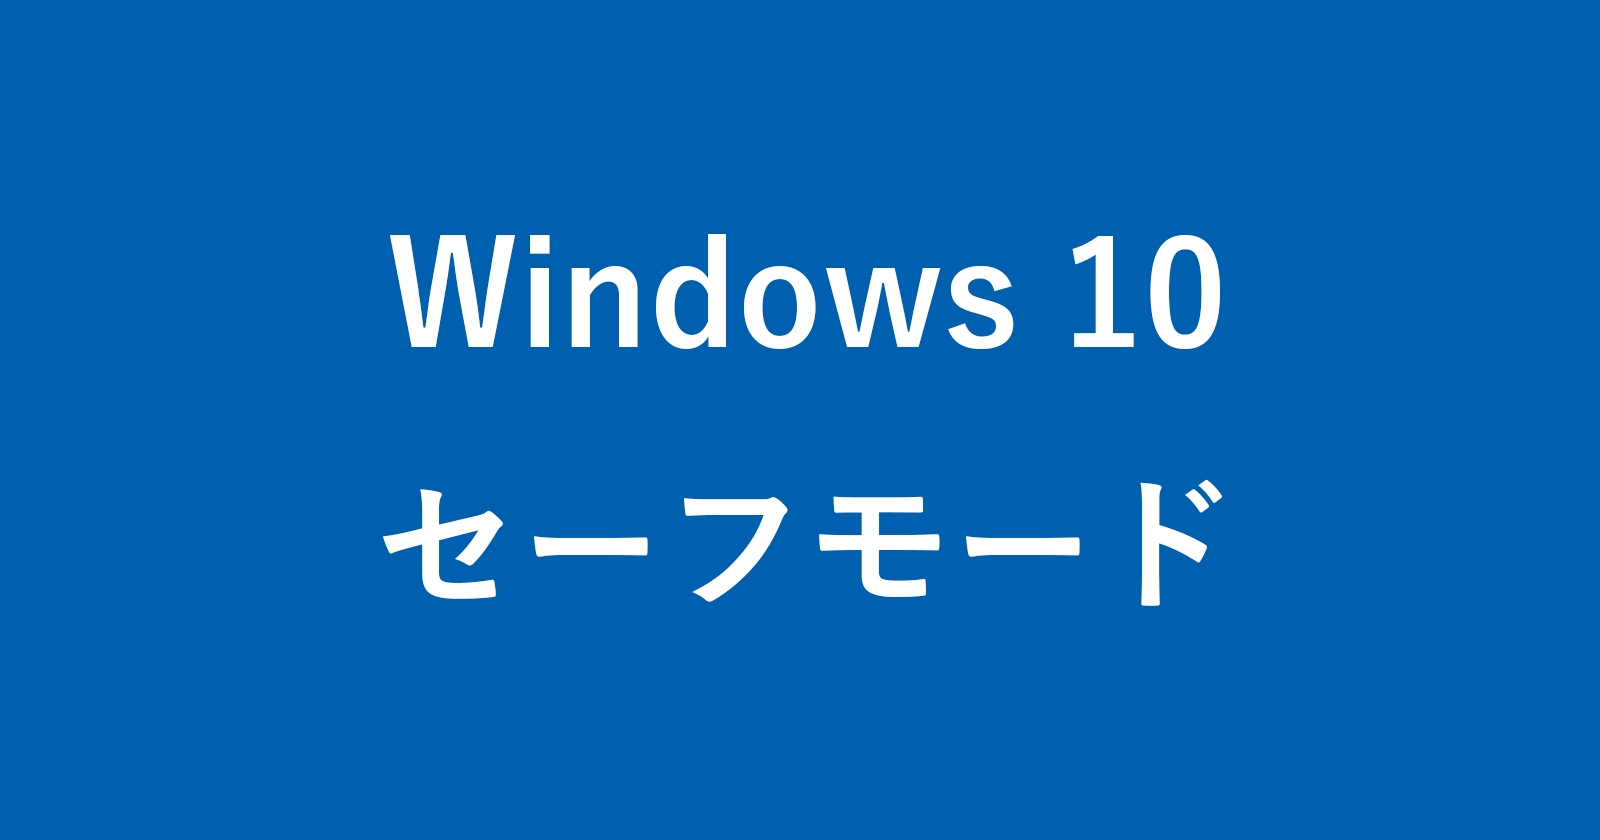 windows 10 safemode